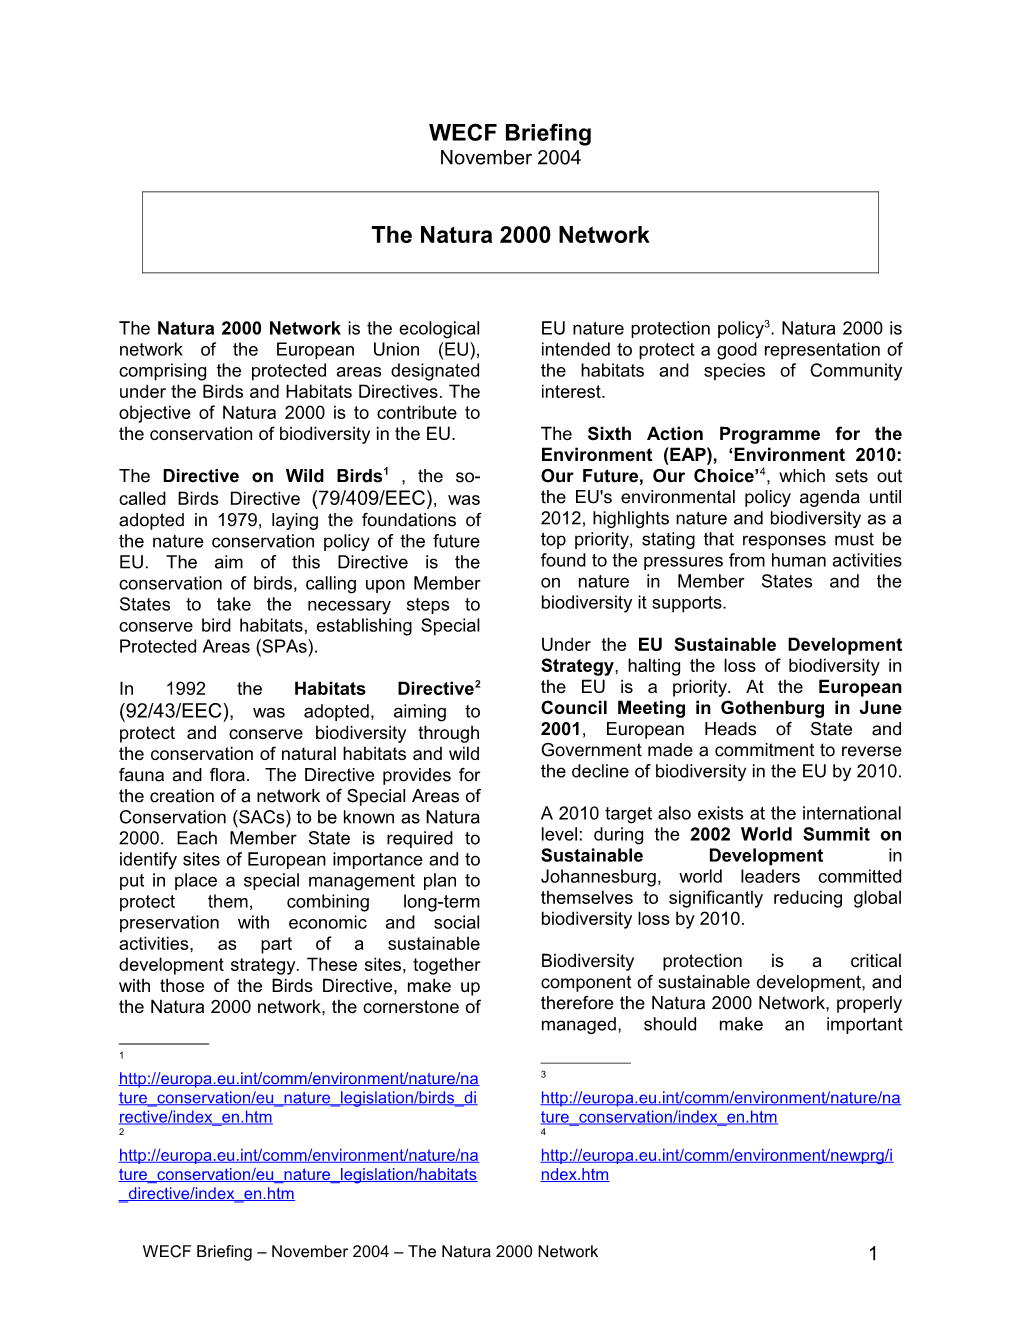 The Natura 2000 Network